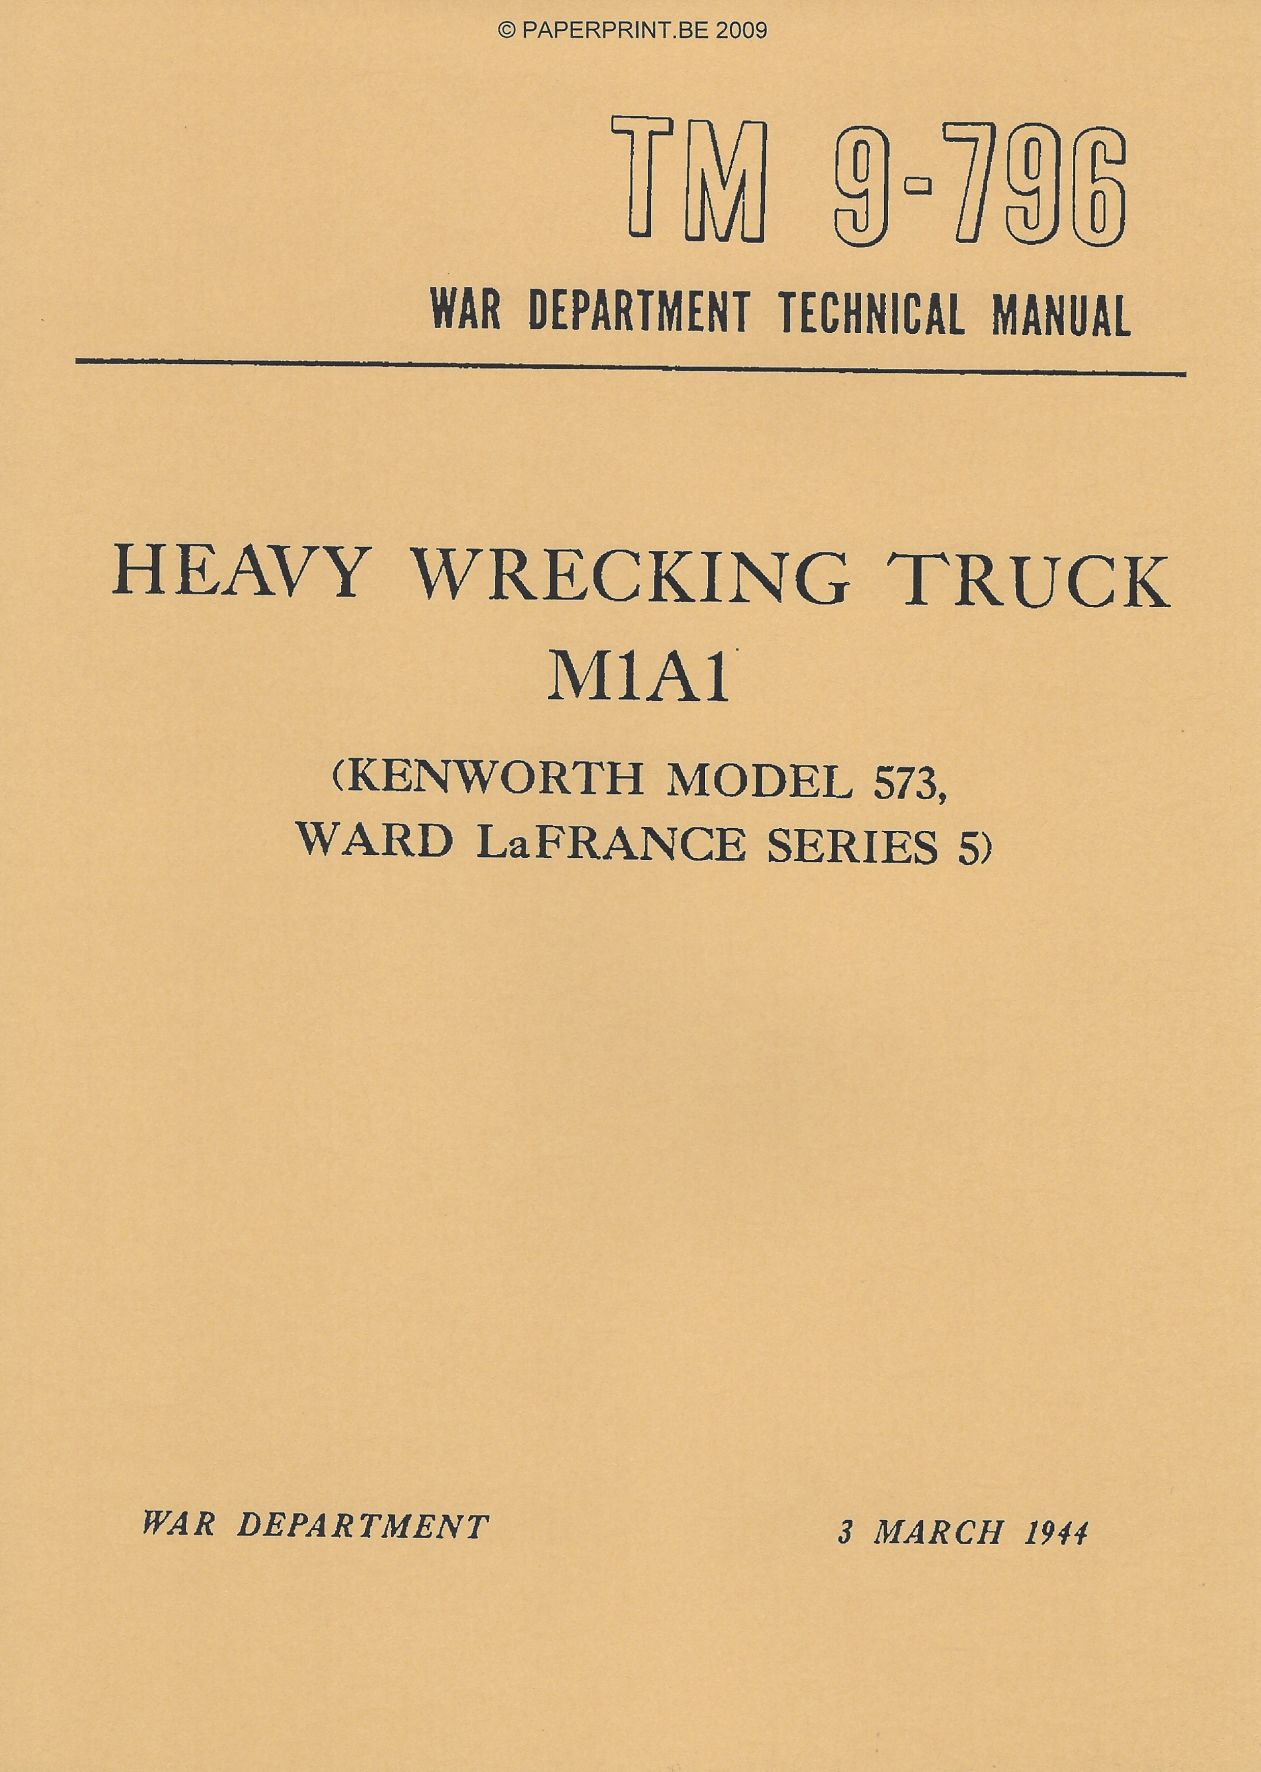 TM 9-796 US HEAVY WRECKING TRUCK M1A1 (KENWORTH MODEL 573, WARD LA FRANCE SERIES 5)